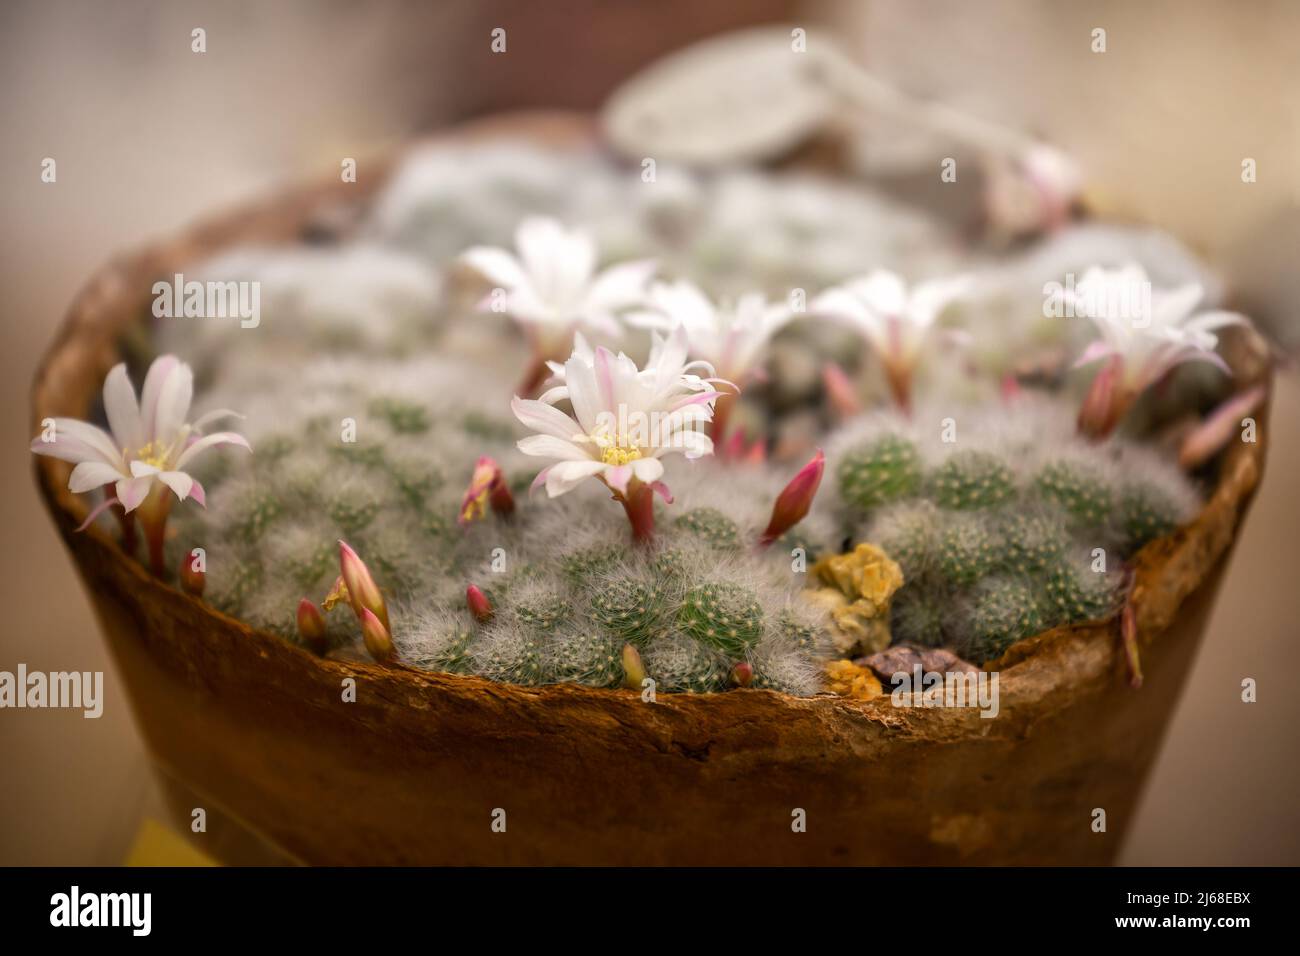 Cactus Rebutia albiflora with white flowers in a flower pot Stock Photo